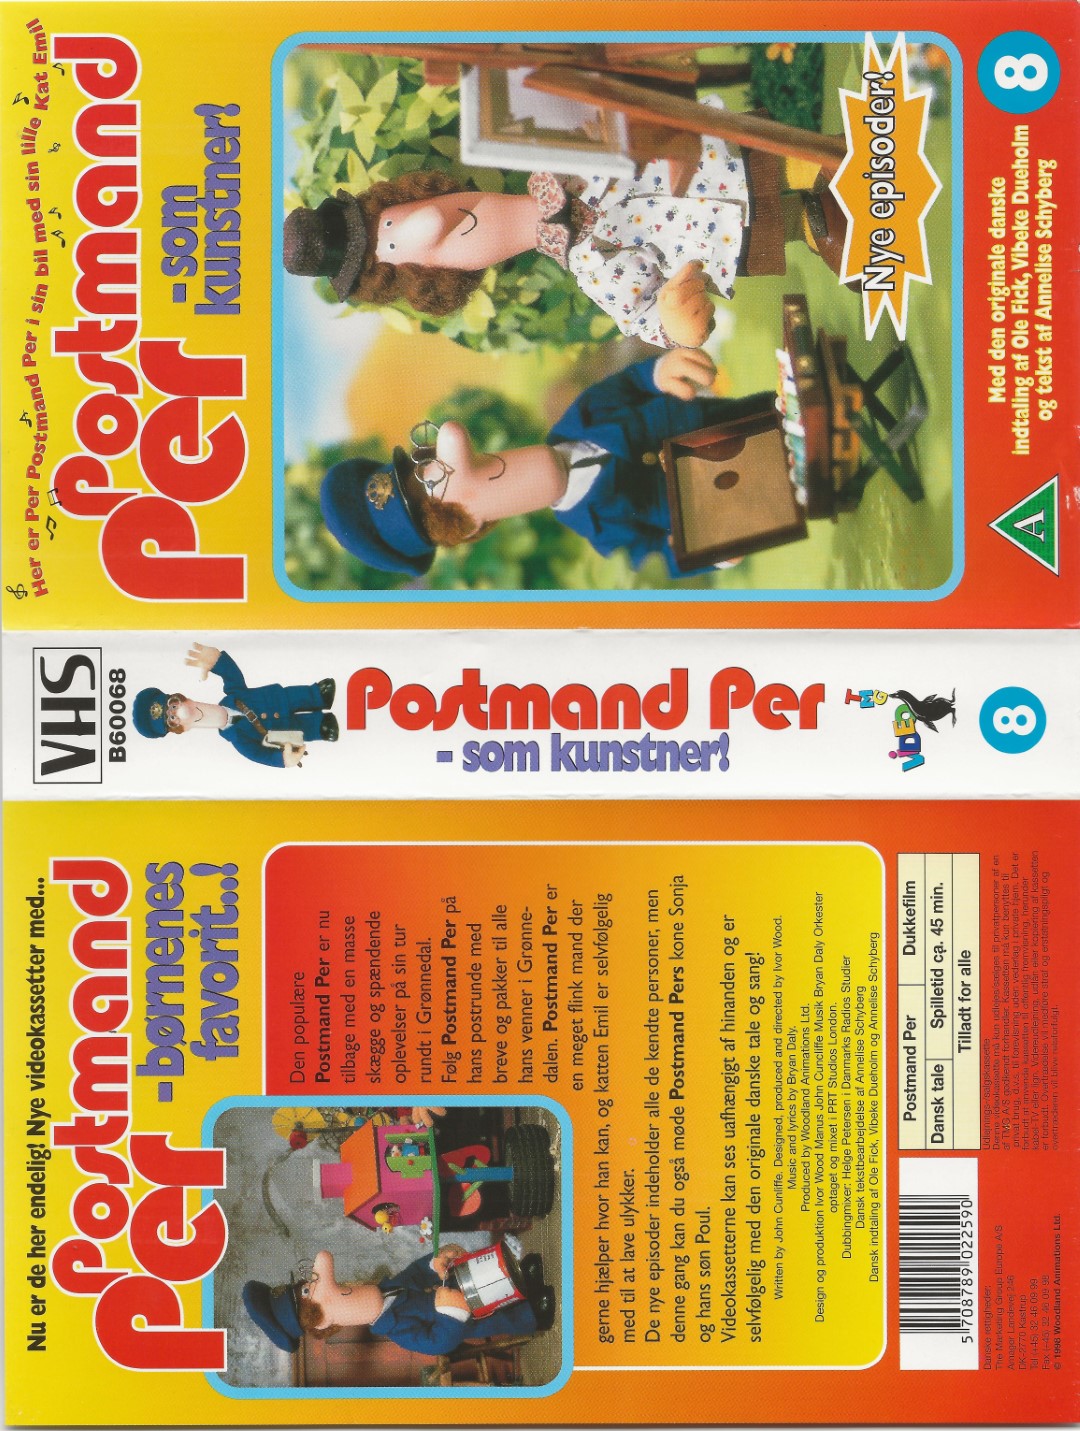 Postmand Per <p>Org.titel: Postman Pat</p> VHS TMG A/S 1998